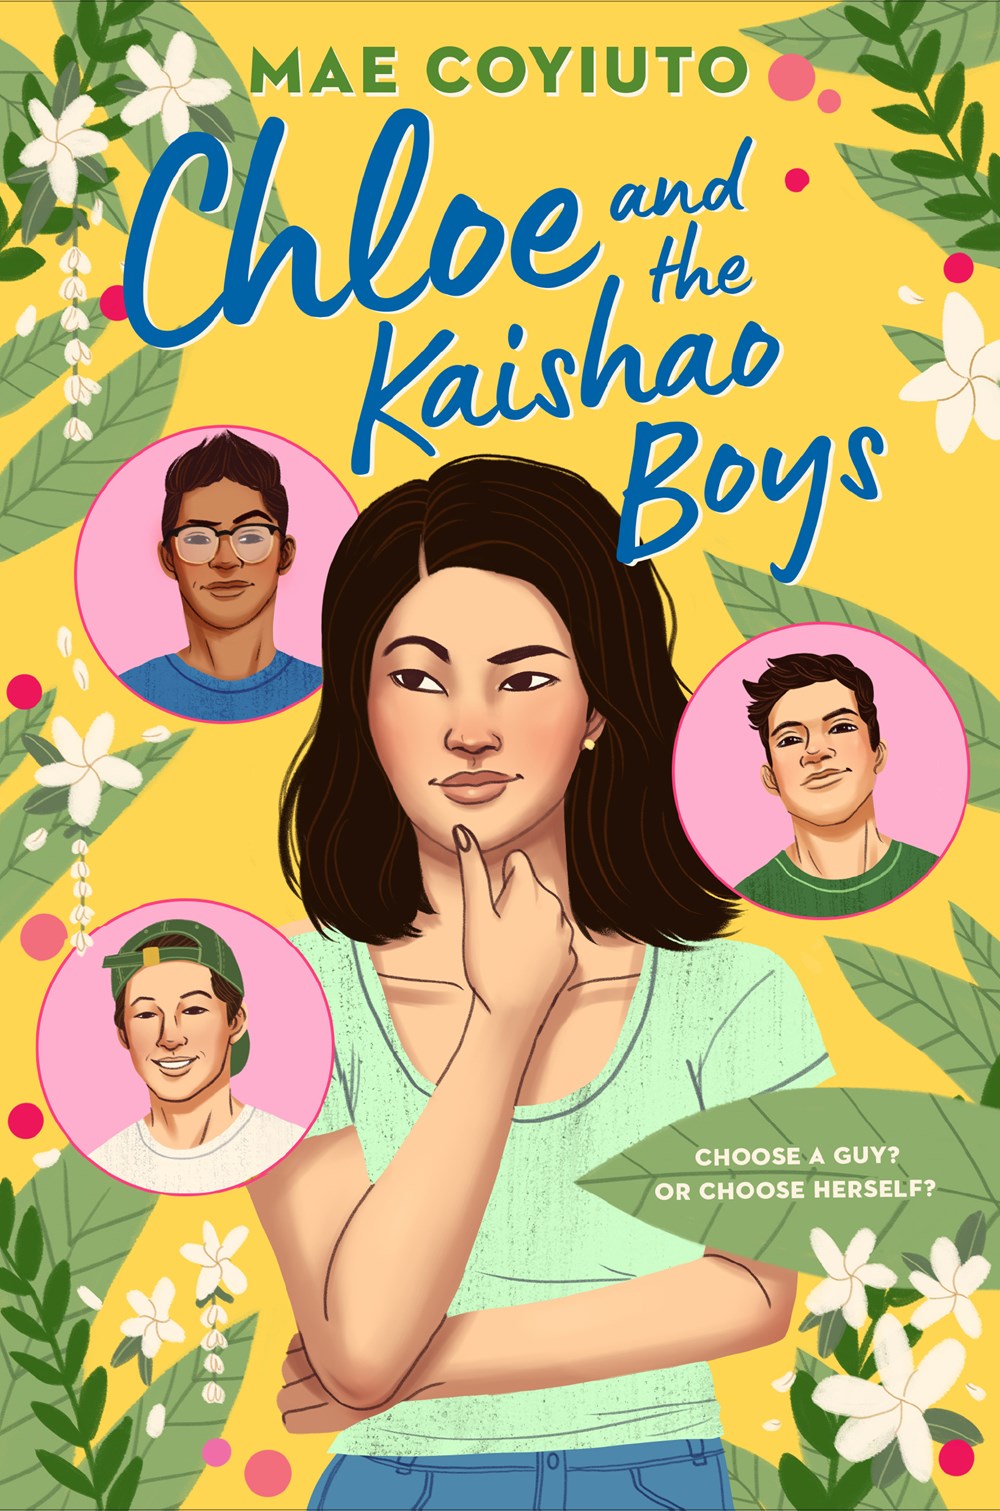 Chloe and the Kaisho Boys